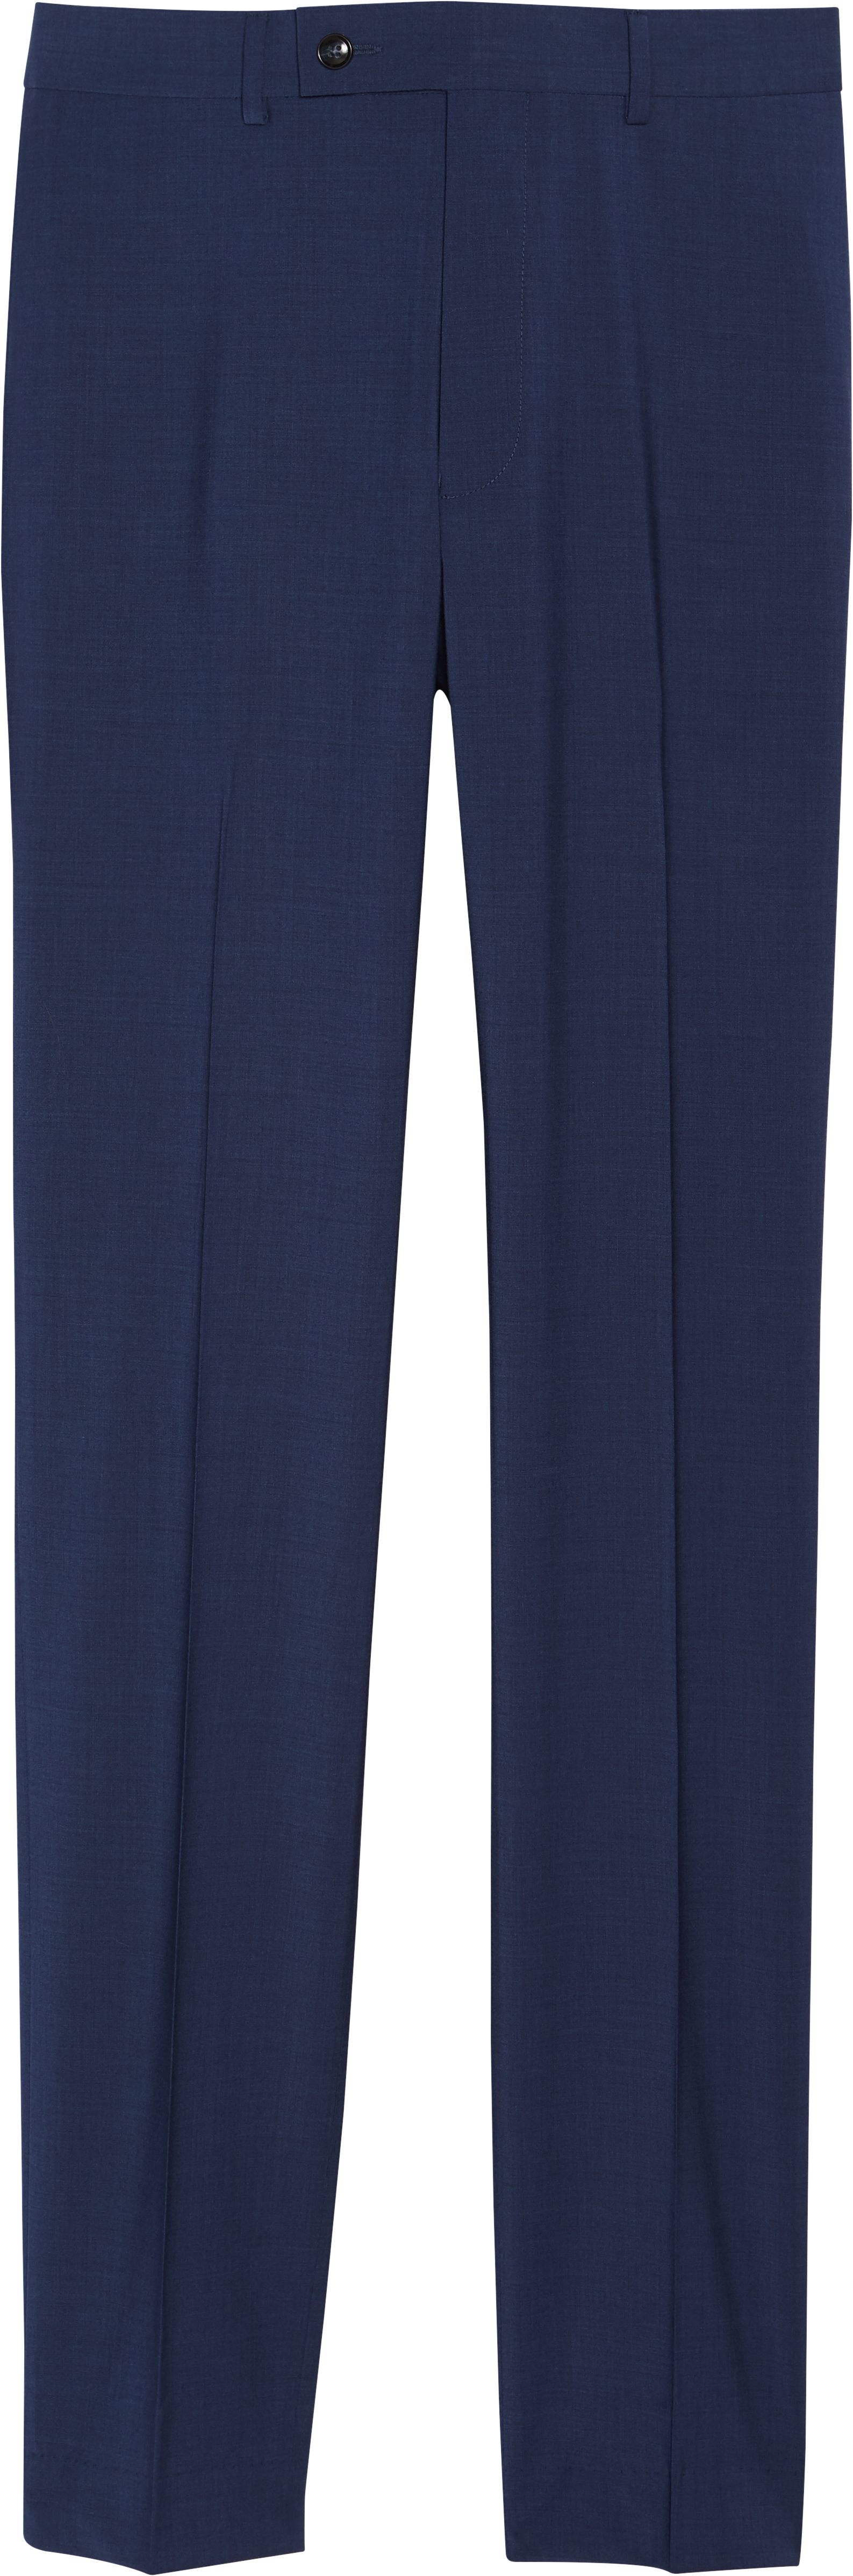 Calvin Klein Skinny Fit Suit Separates Pants, Blue